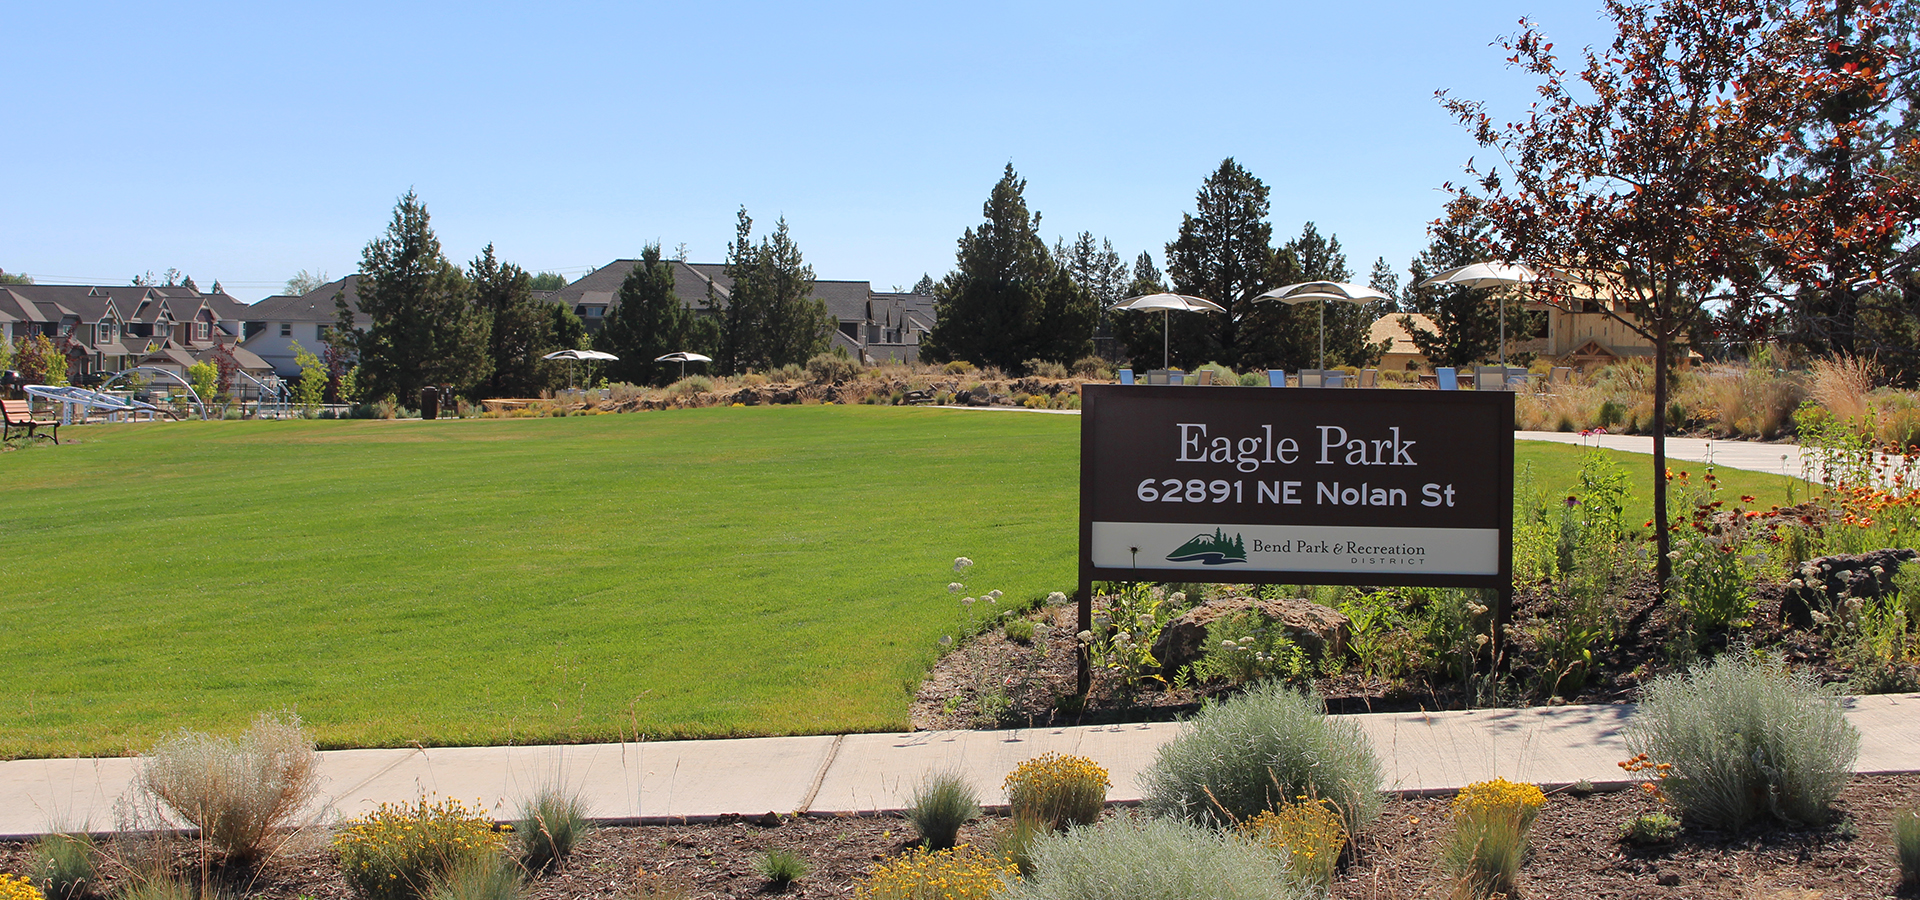 Eagle Park's entrance sign.